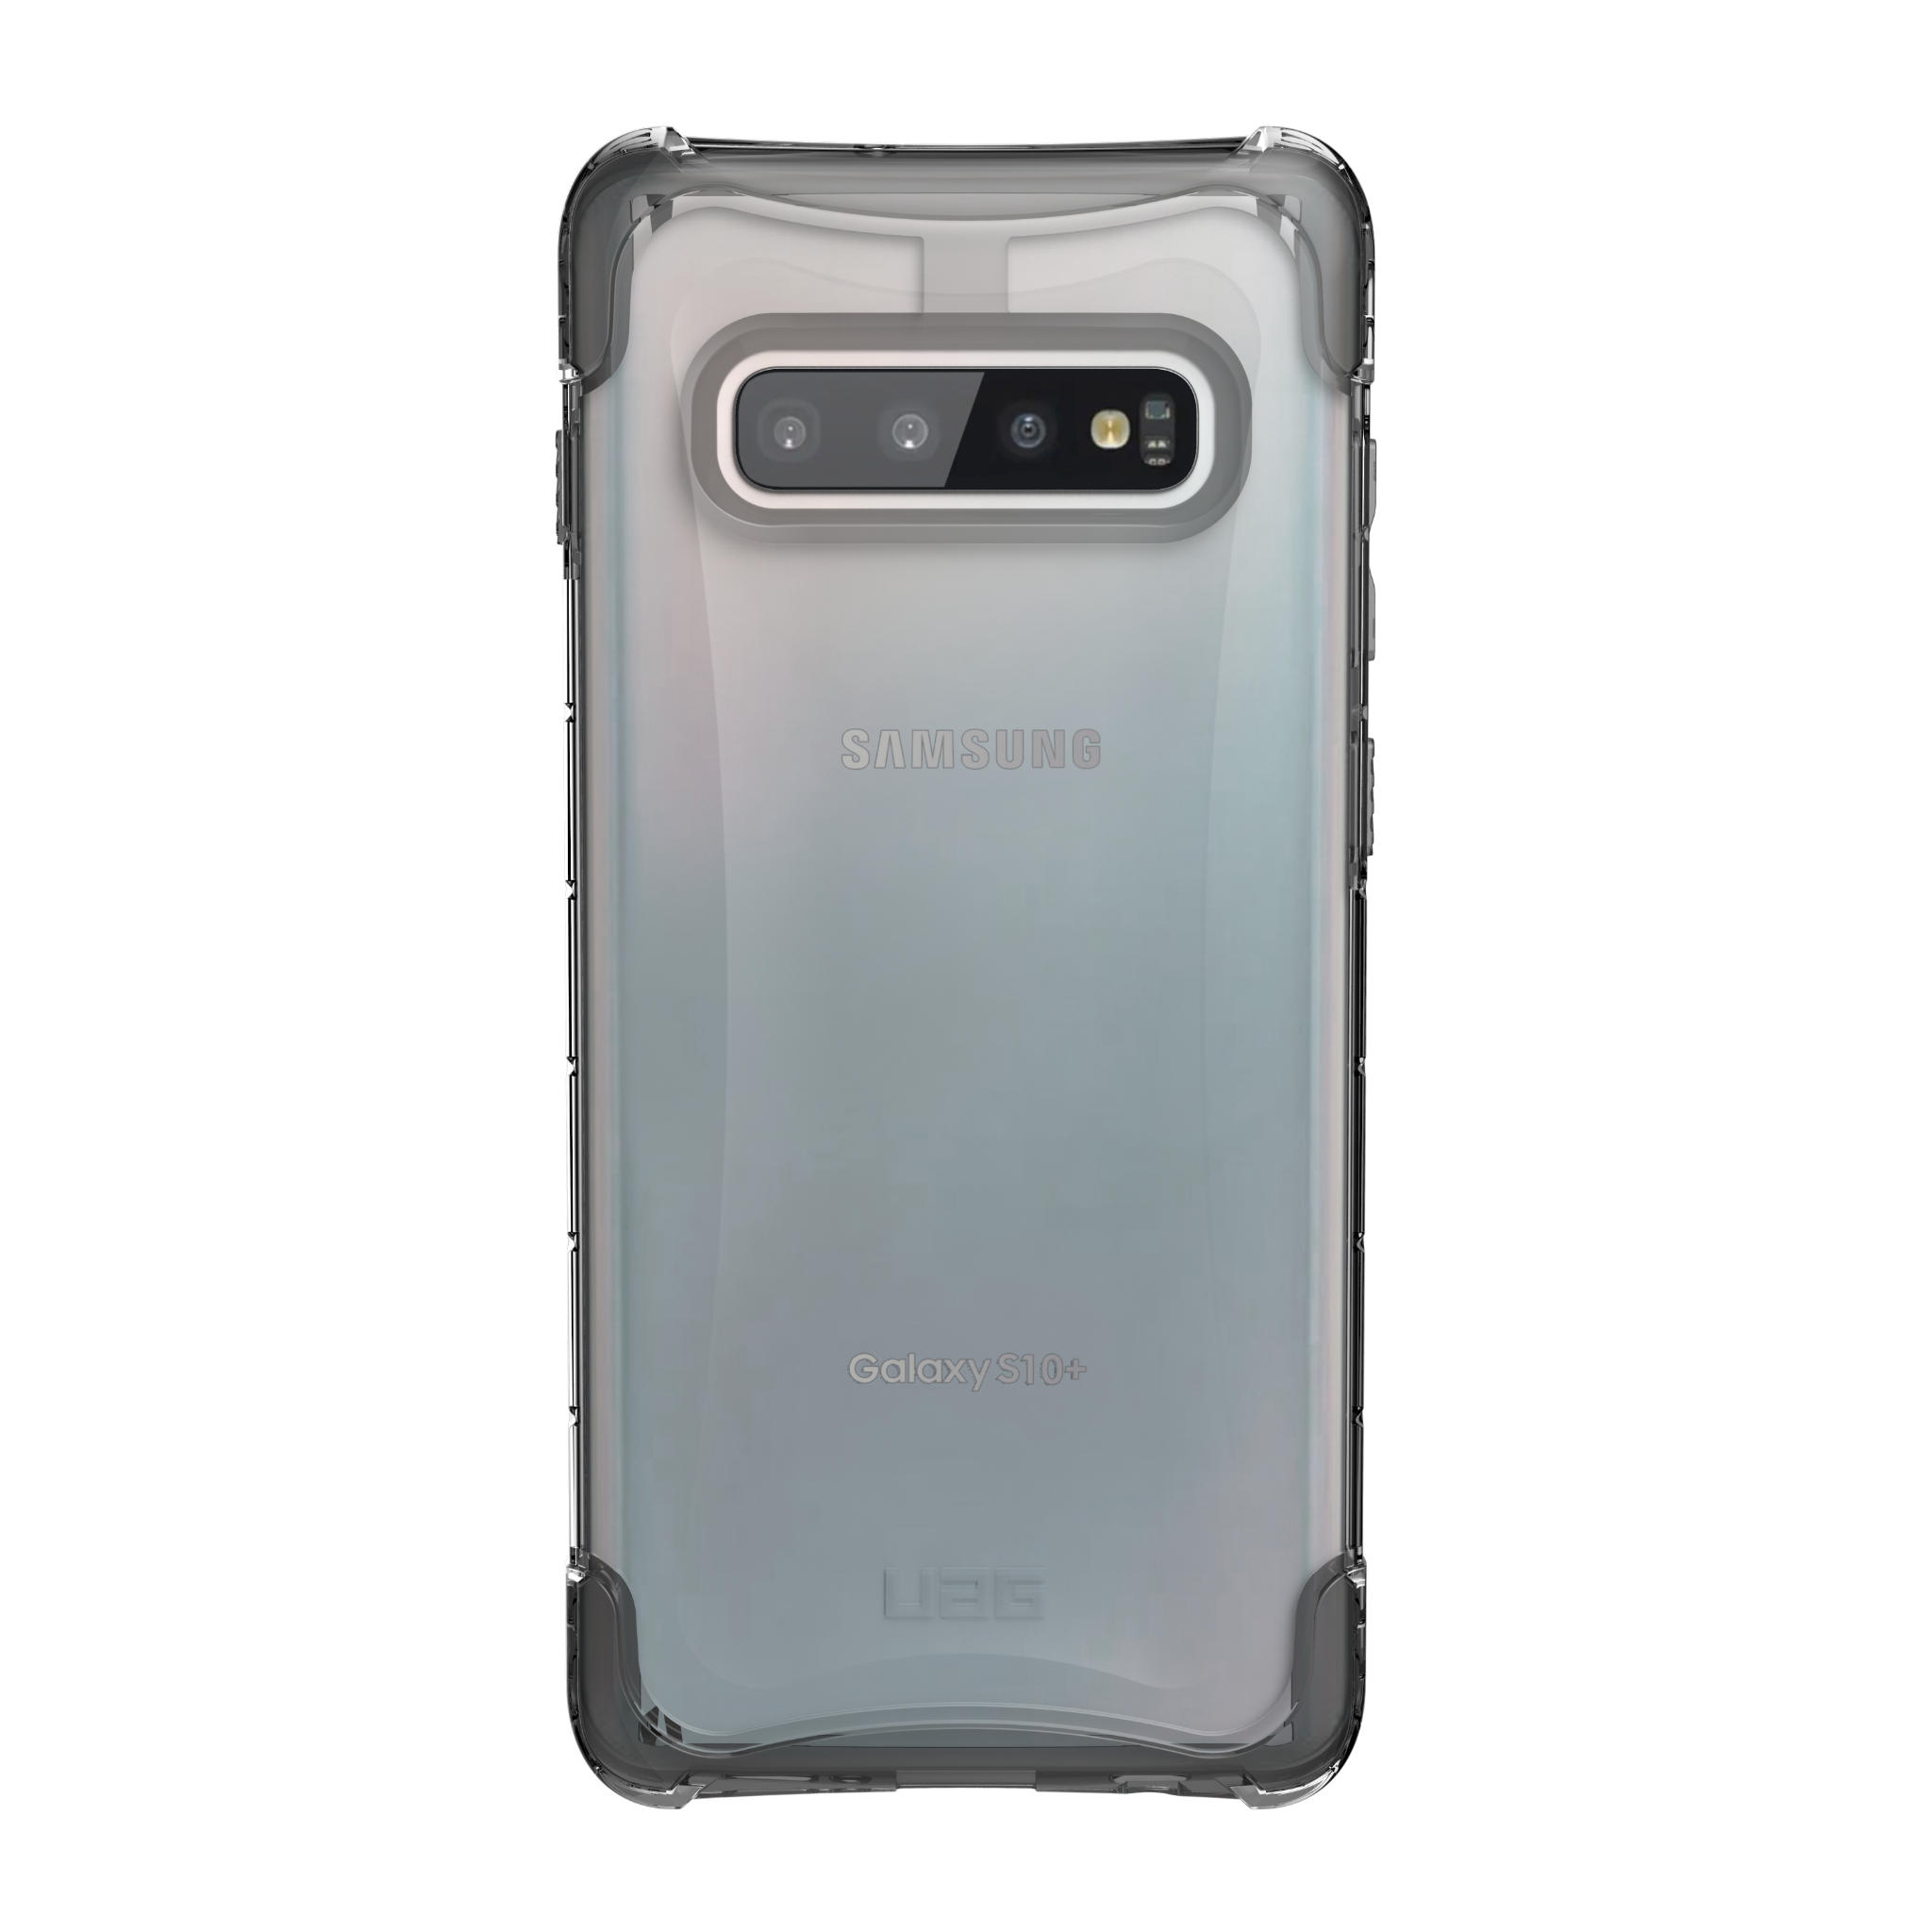  Ốp lưng Plyo cho Samsung Galaxy S10 Plus [6.4-inch] 